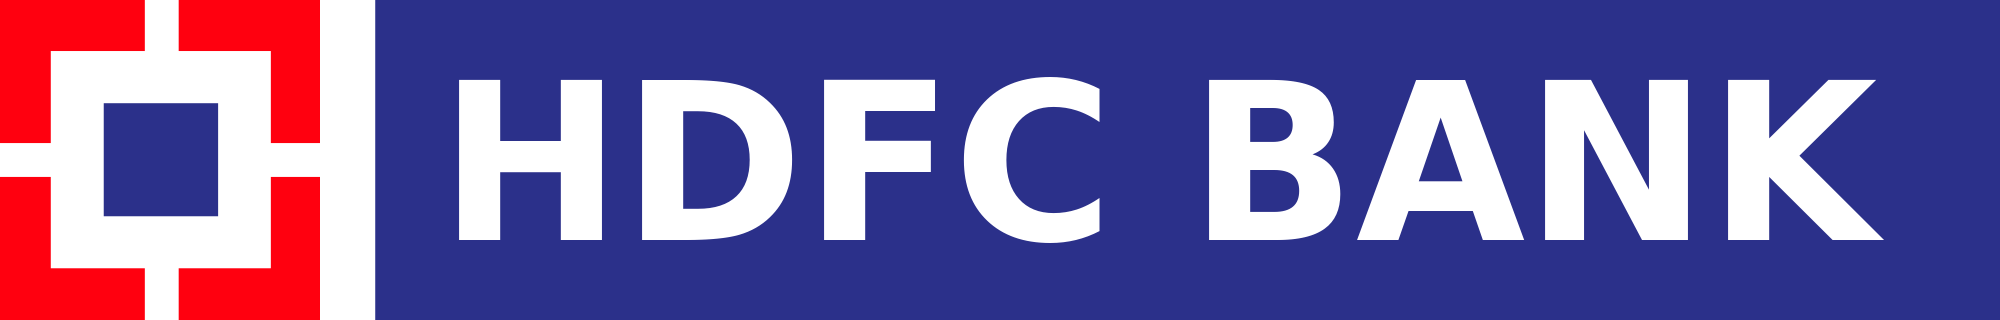 HDFC Bank Logo - HDFC Bank Logo.svg